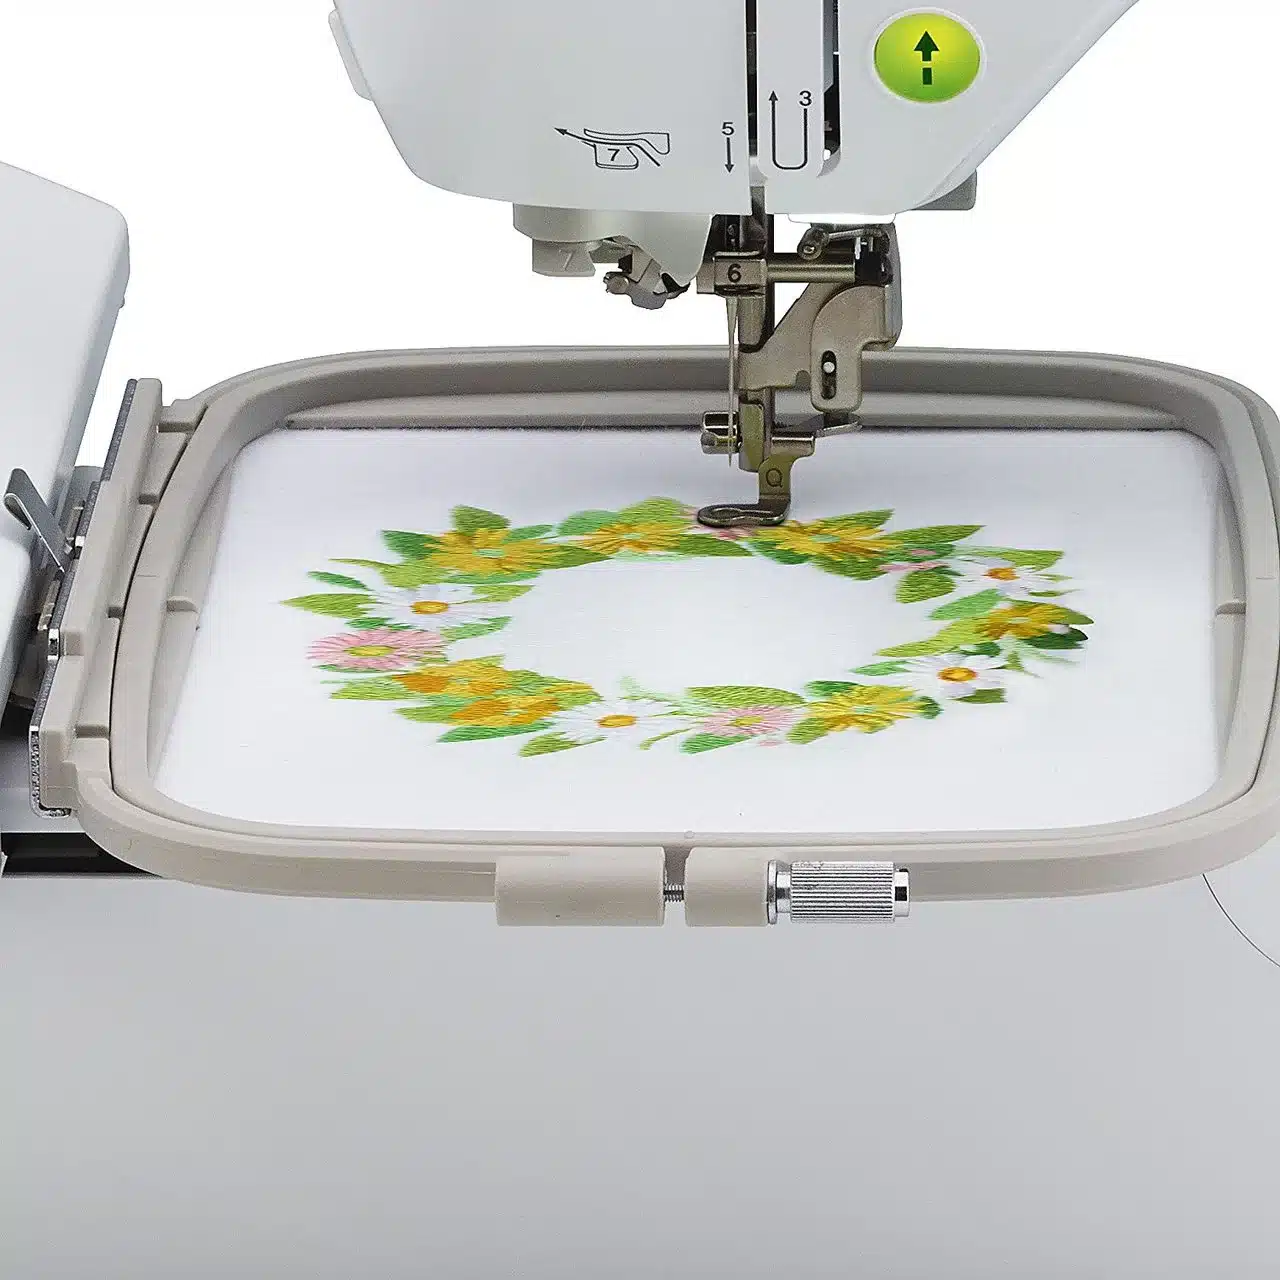 embroidery machine designs